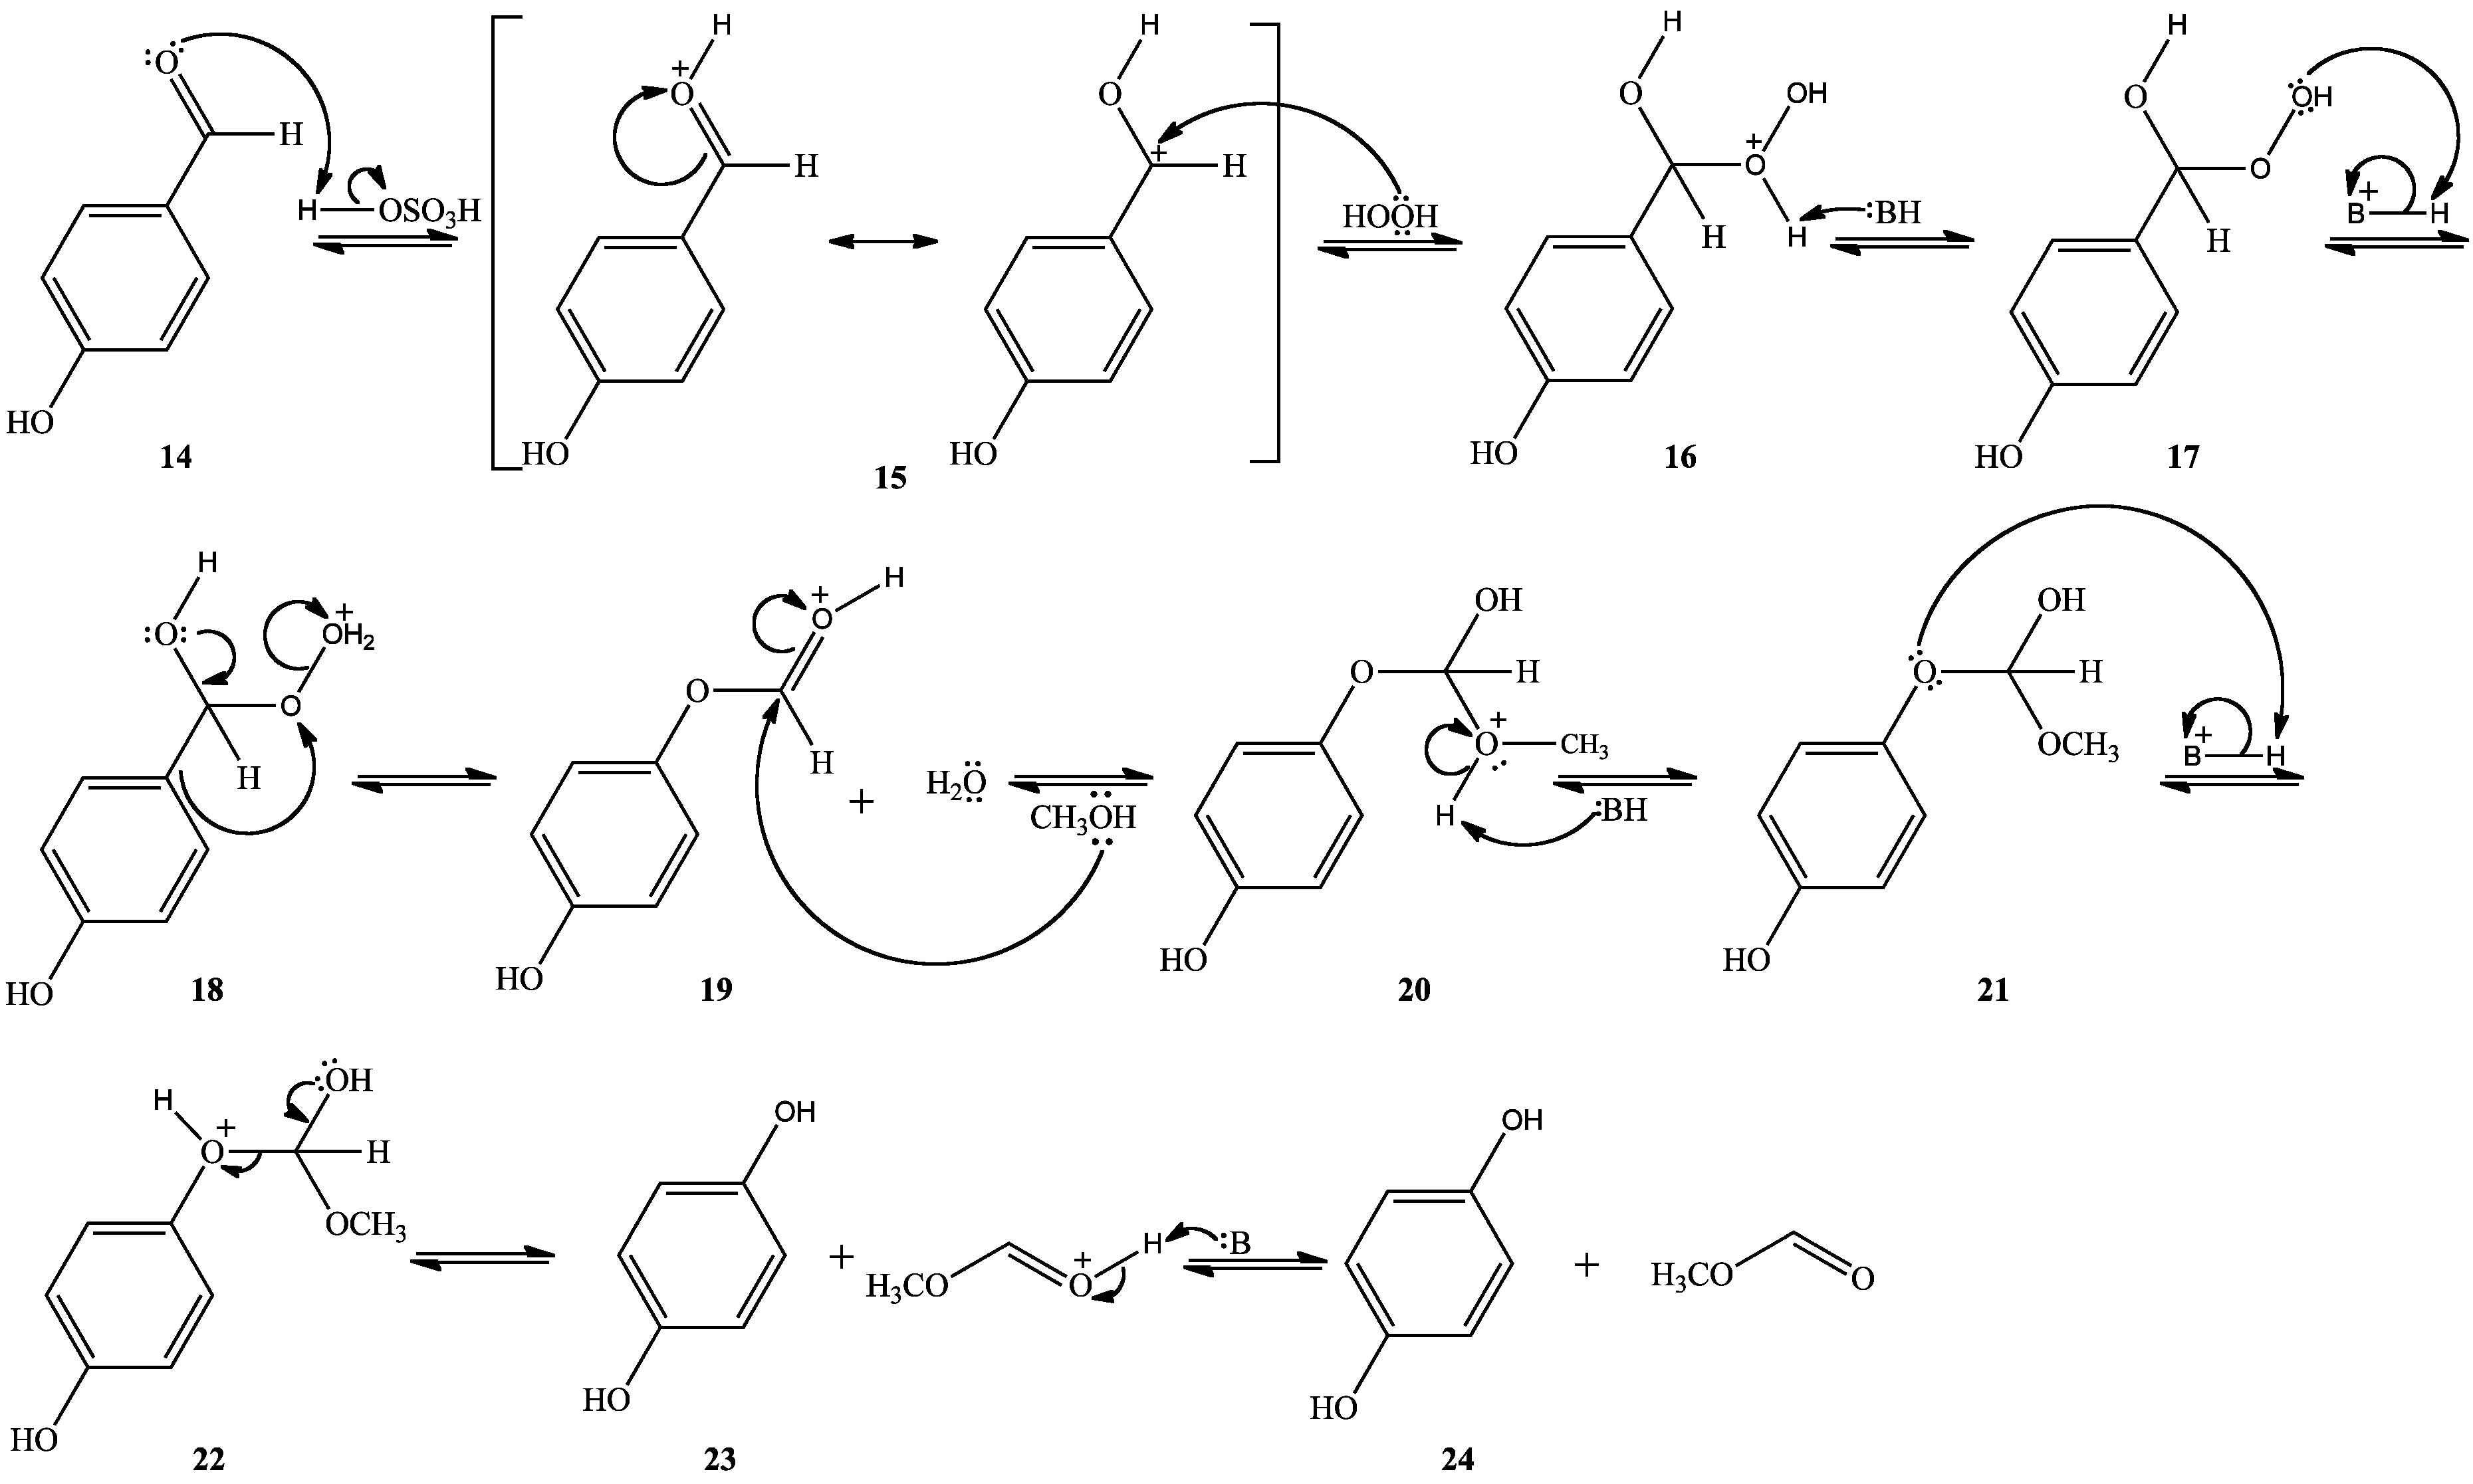 Dakin_oxidation_acid-catalyzed_mechanism.png